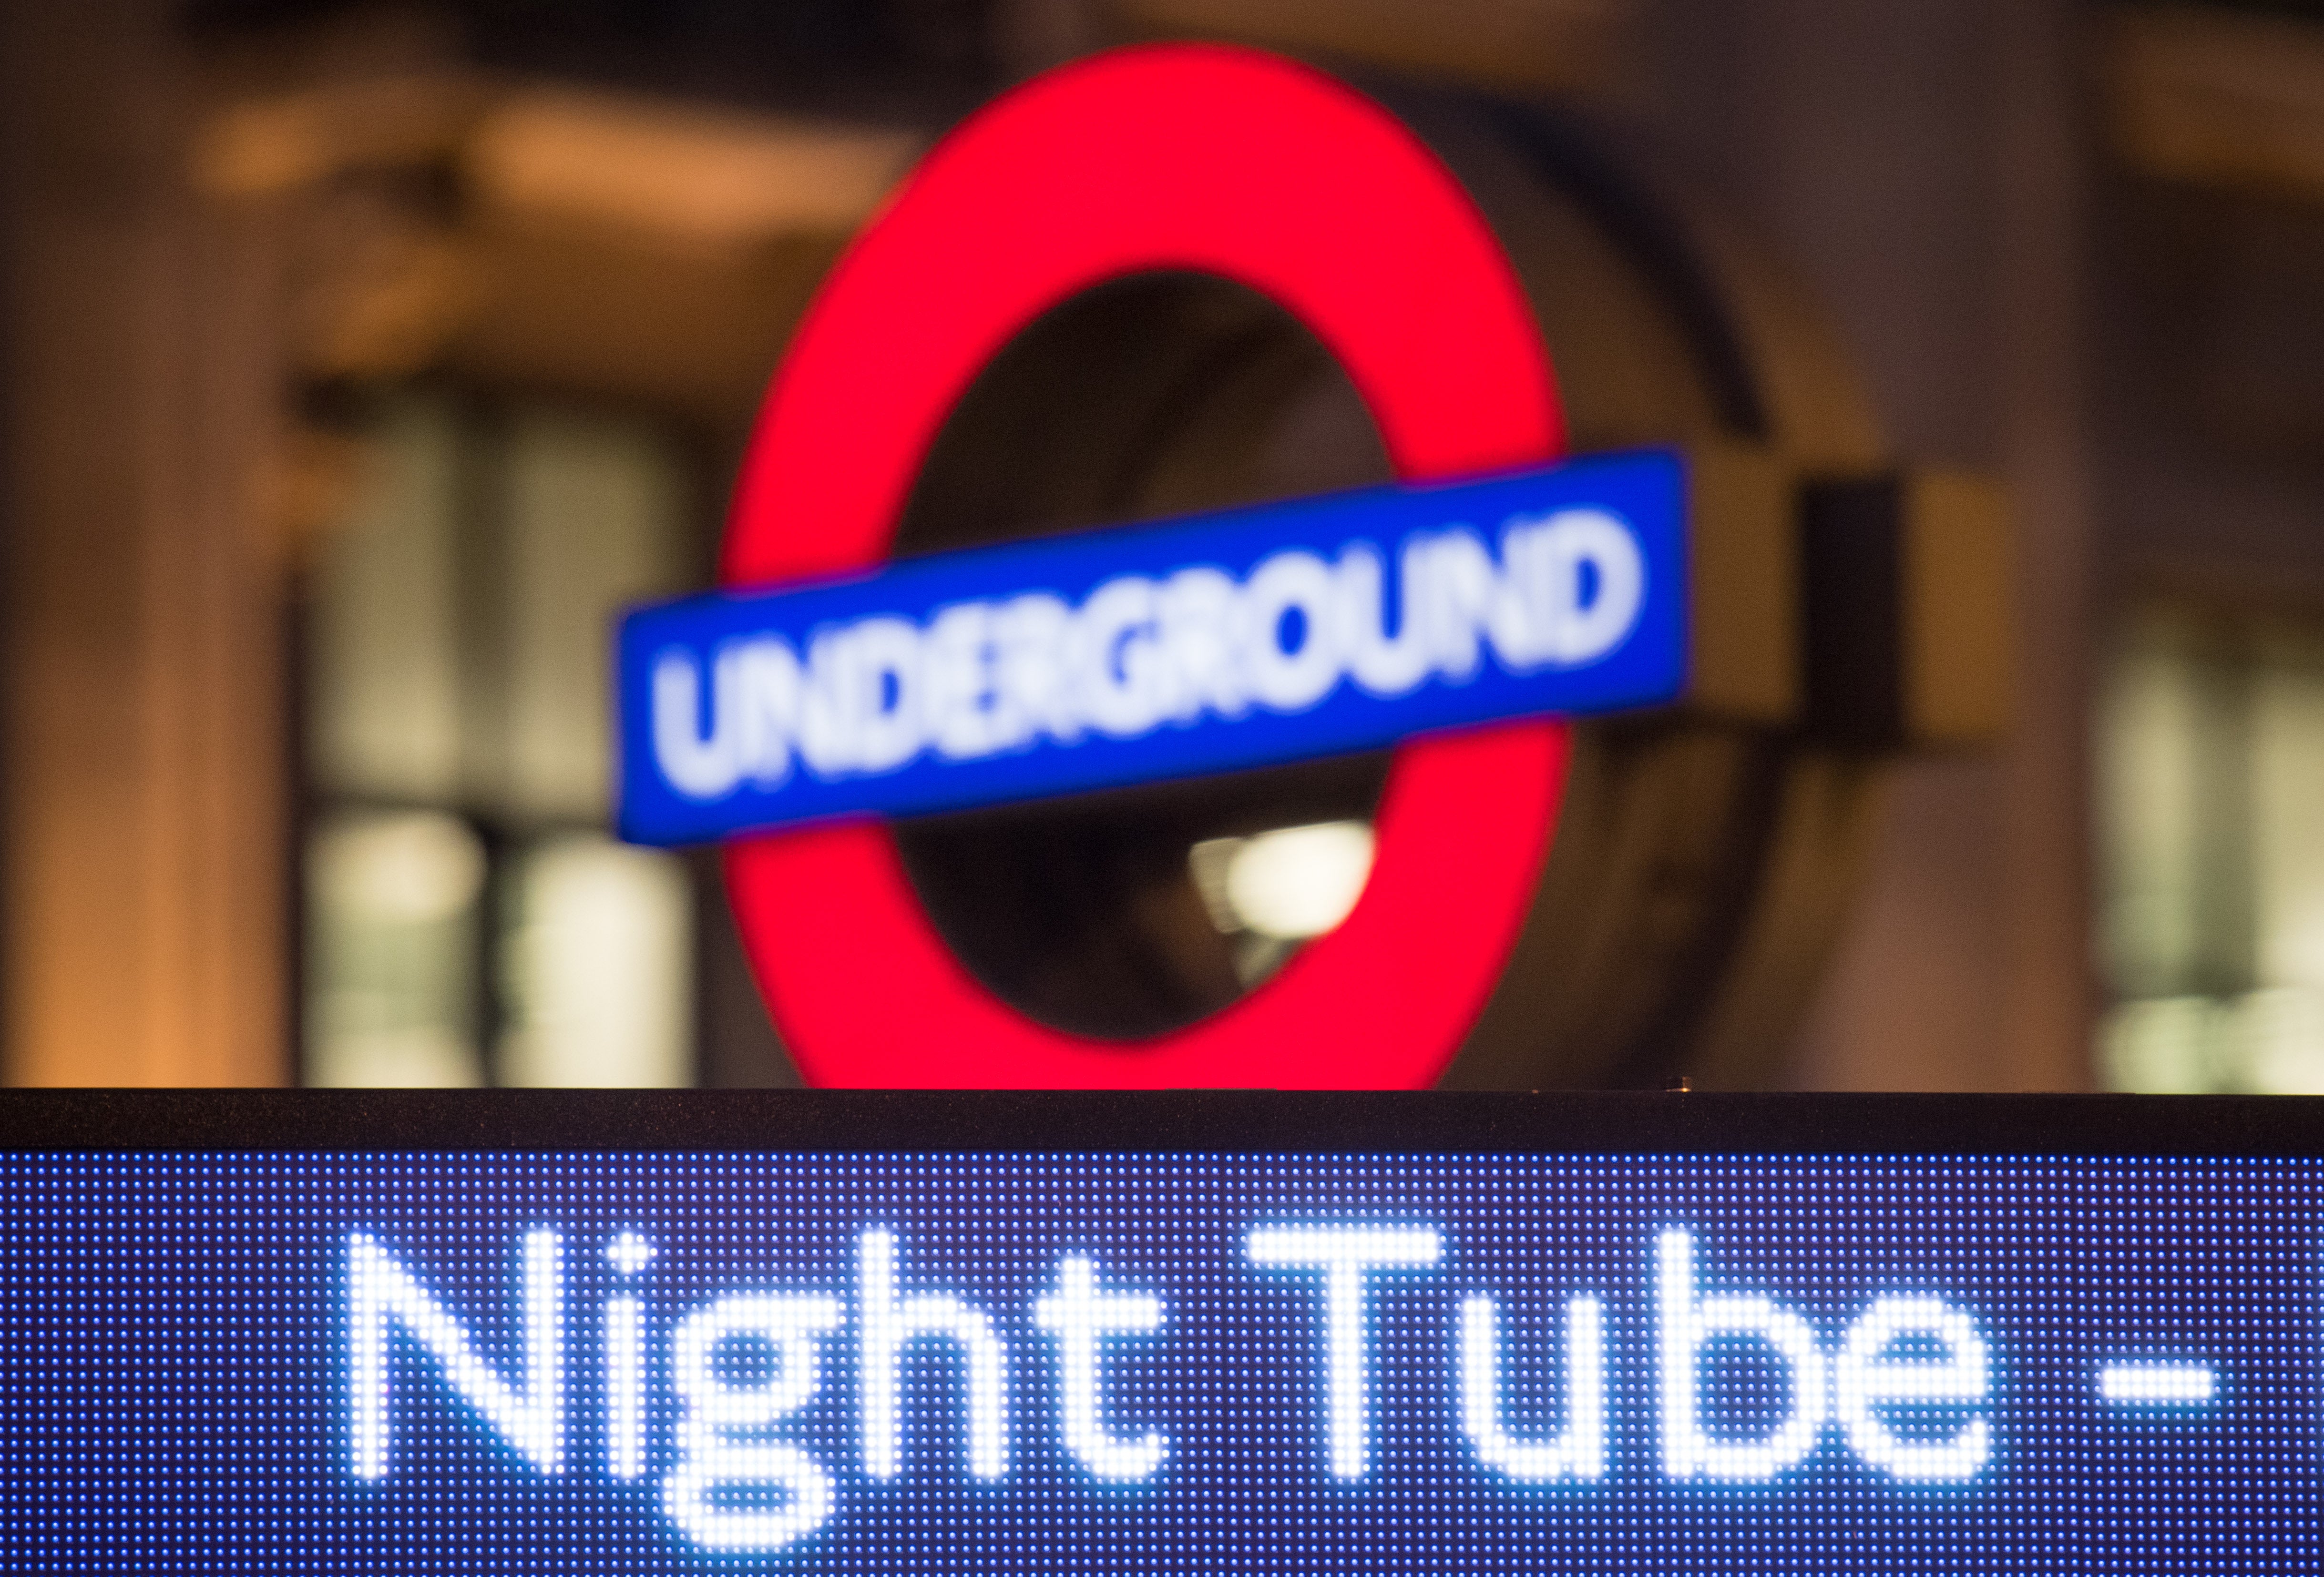 The Night Tube